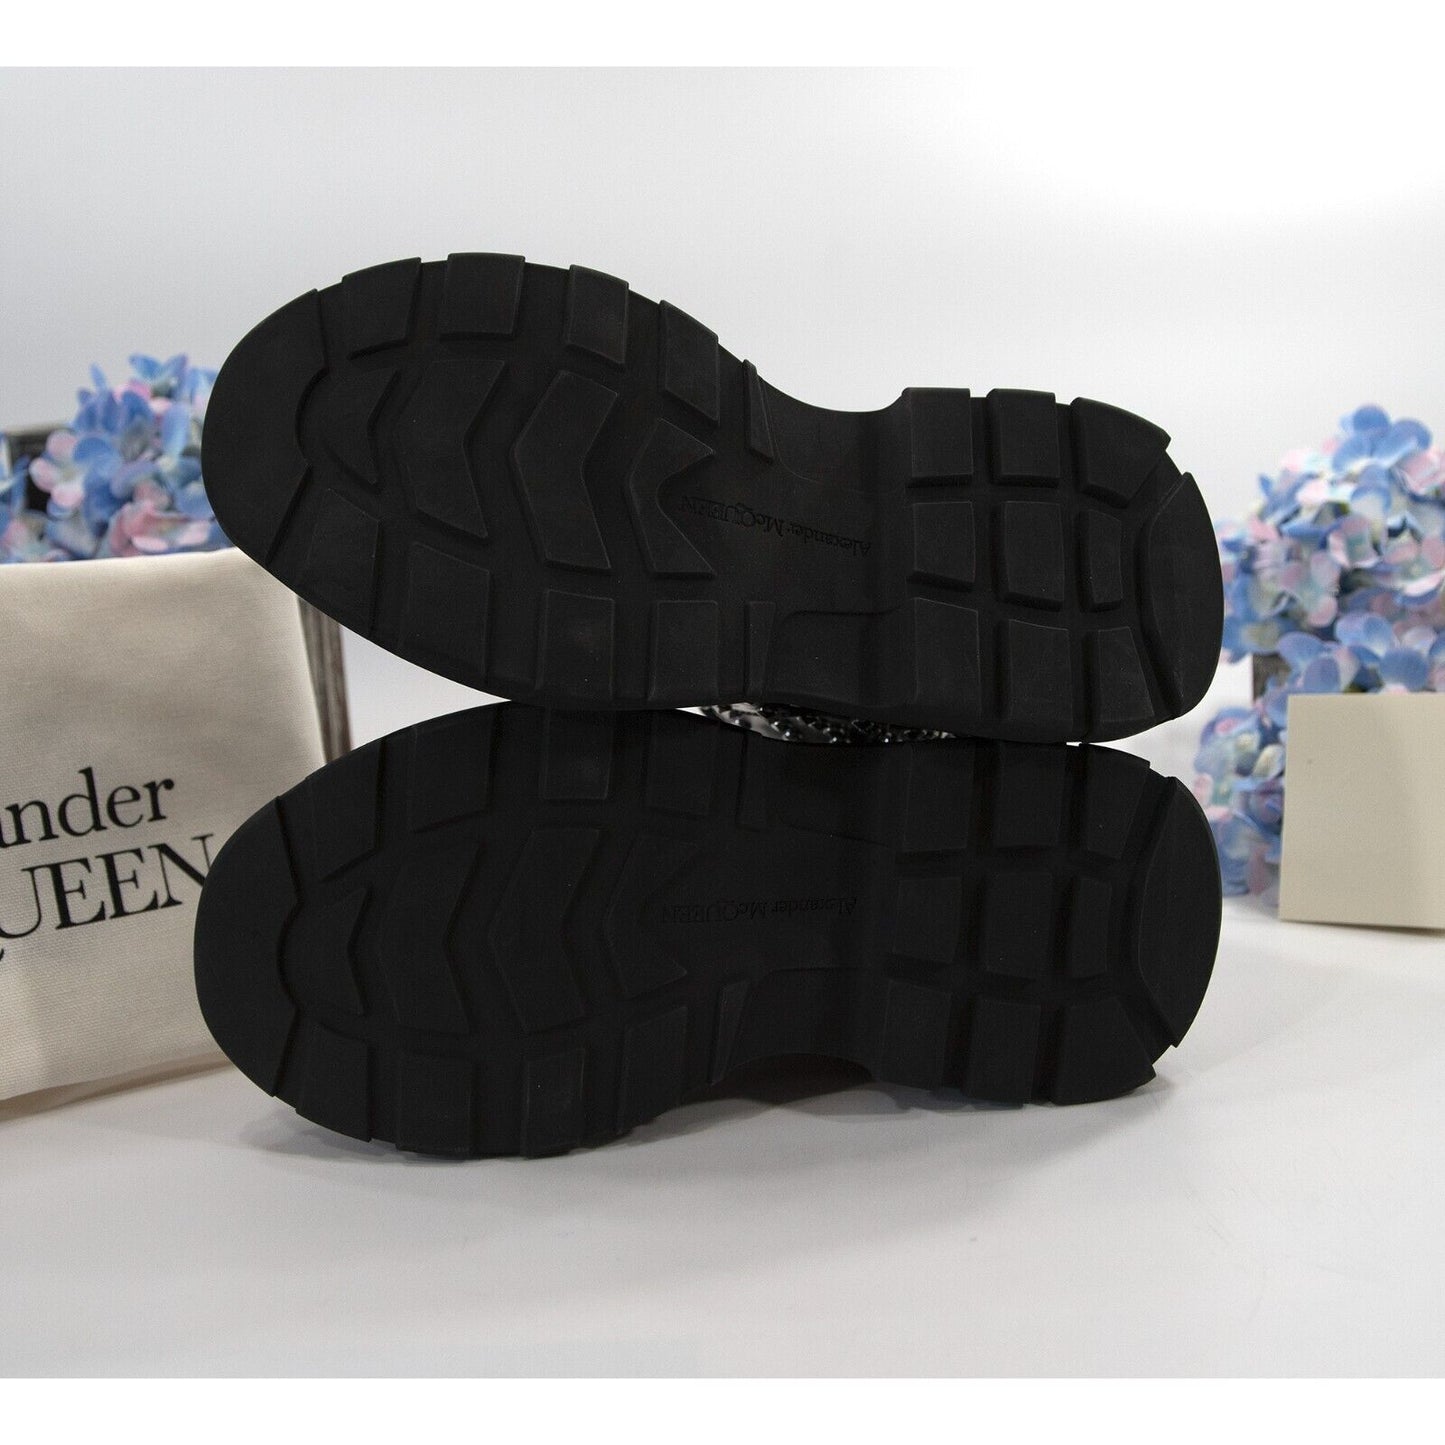 Alexander McQueen Tread Slick Studded Black Leather Lug Sole Boots 37 NIB